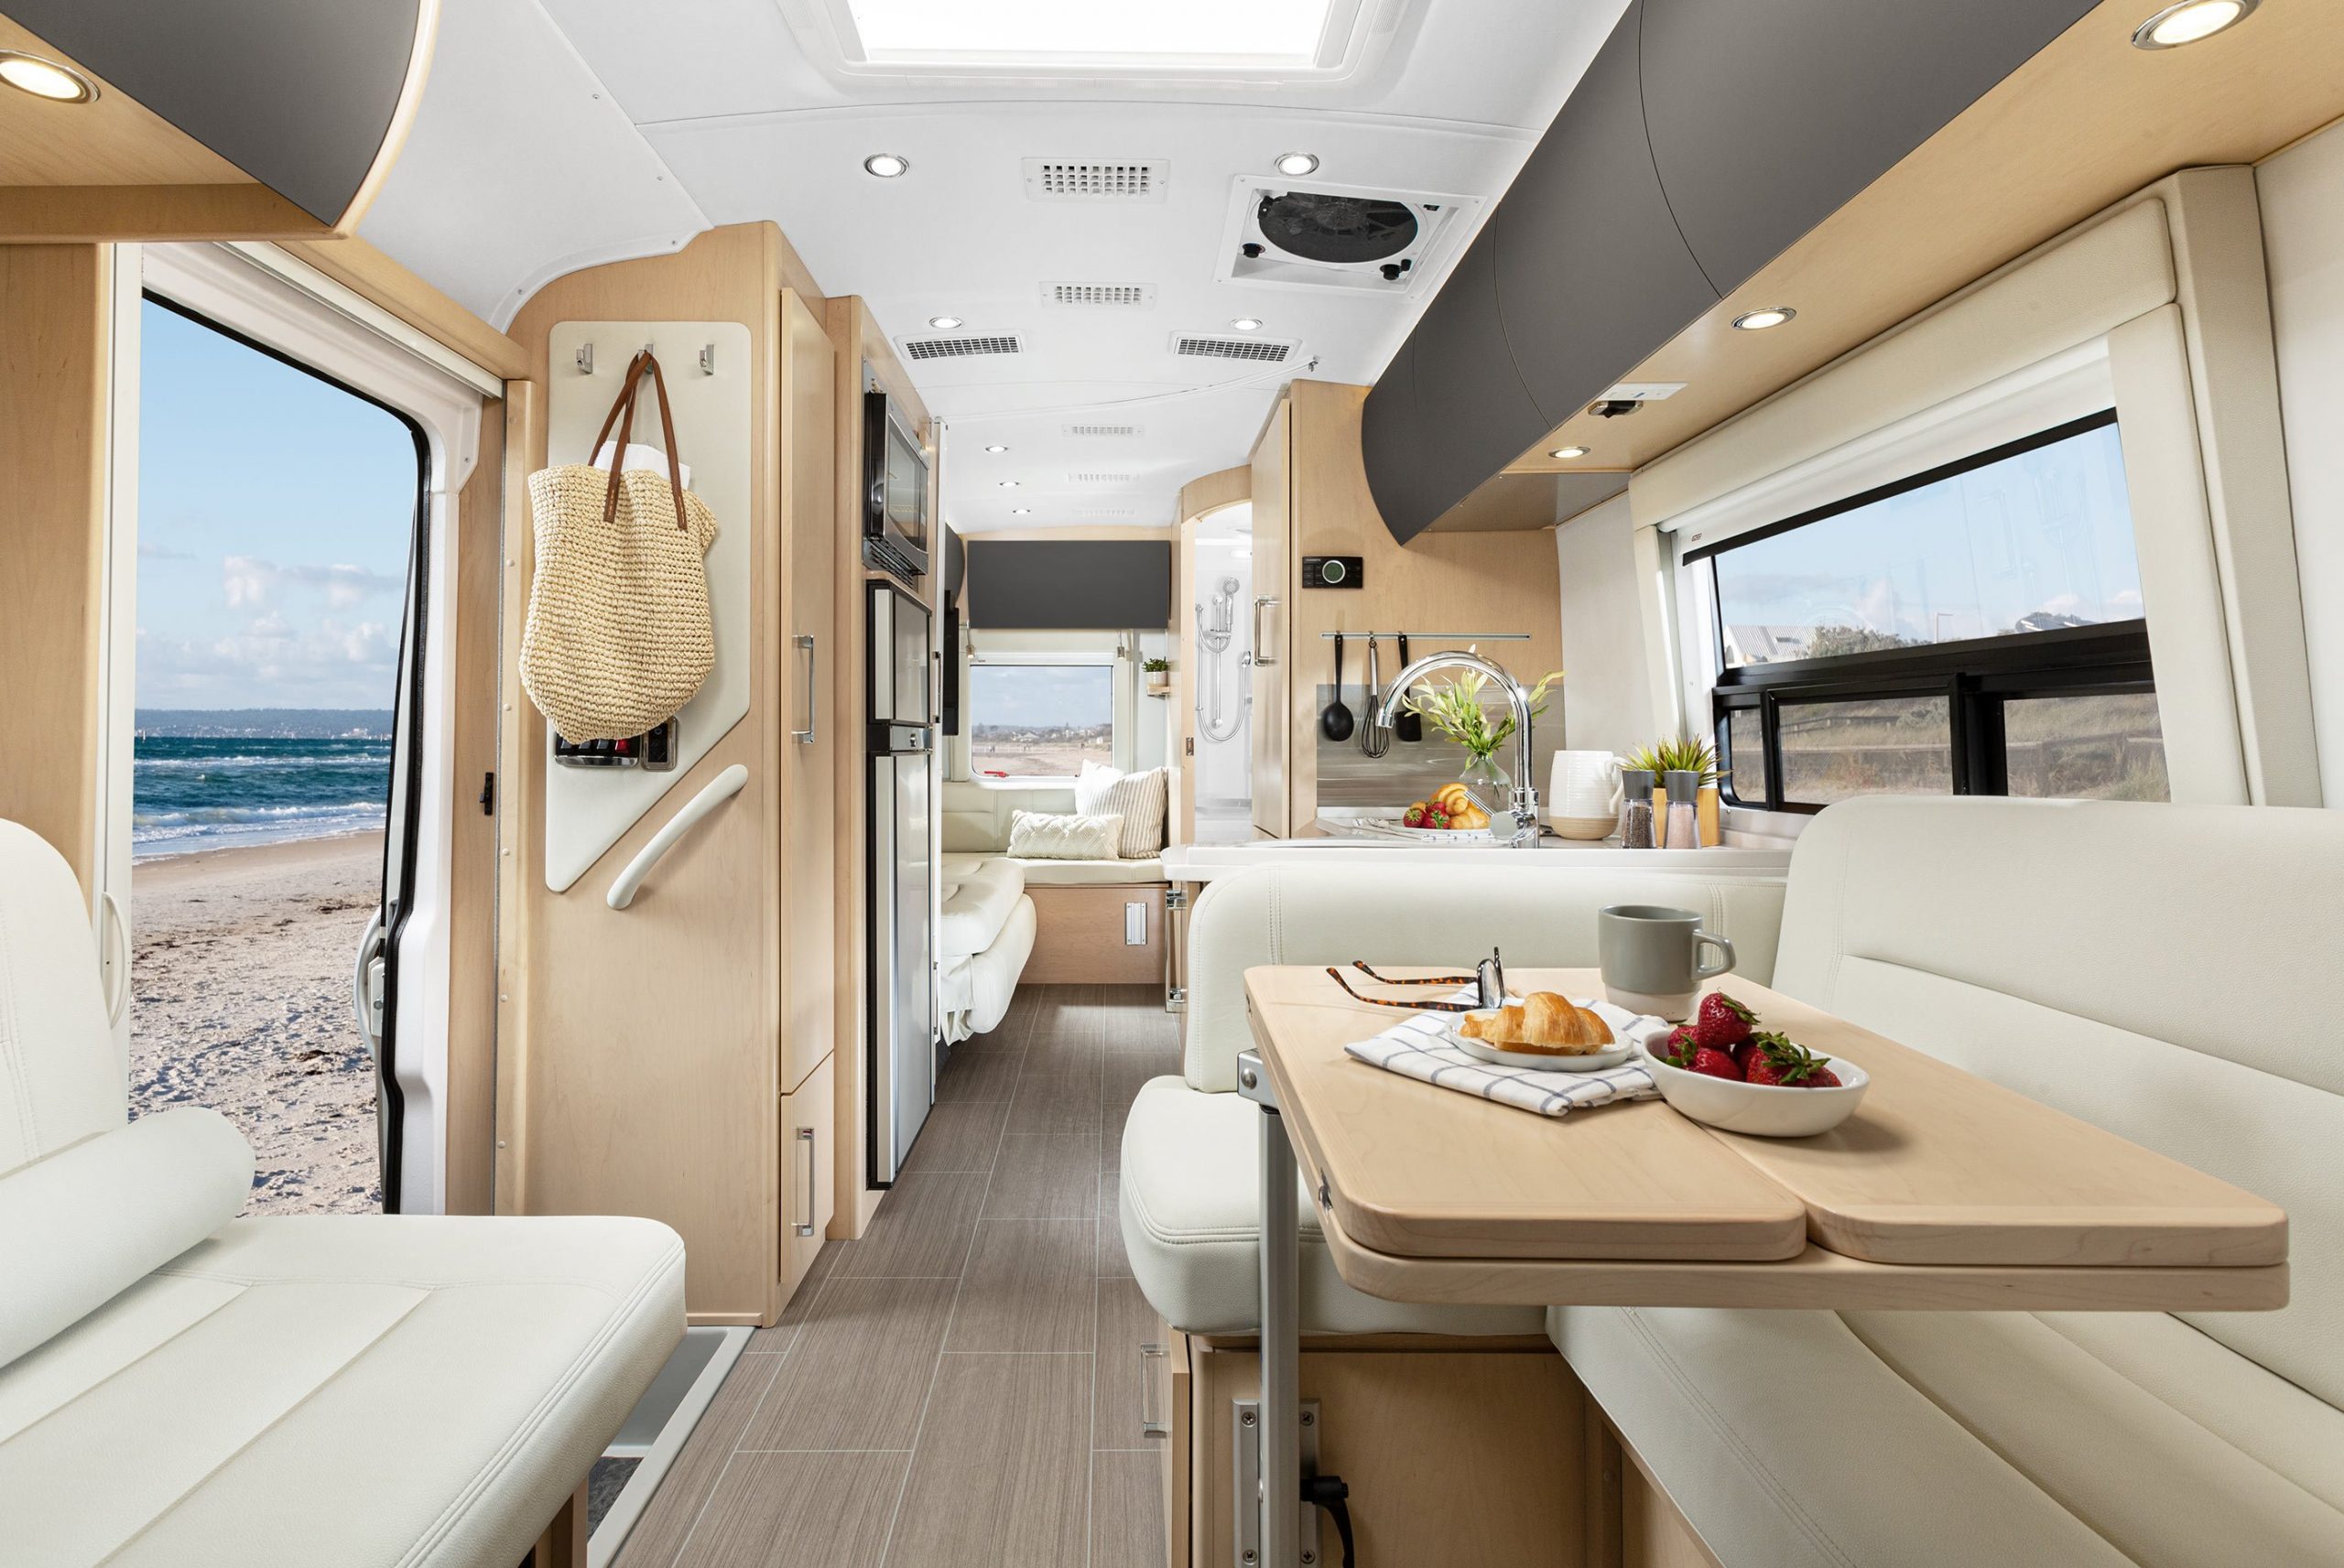 The interior of the 2020 Serenity camper van by Leisure Travel Vans